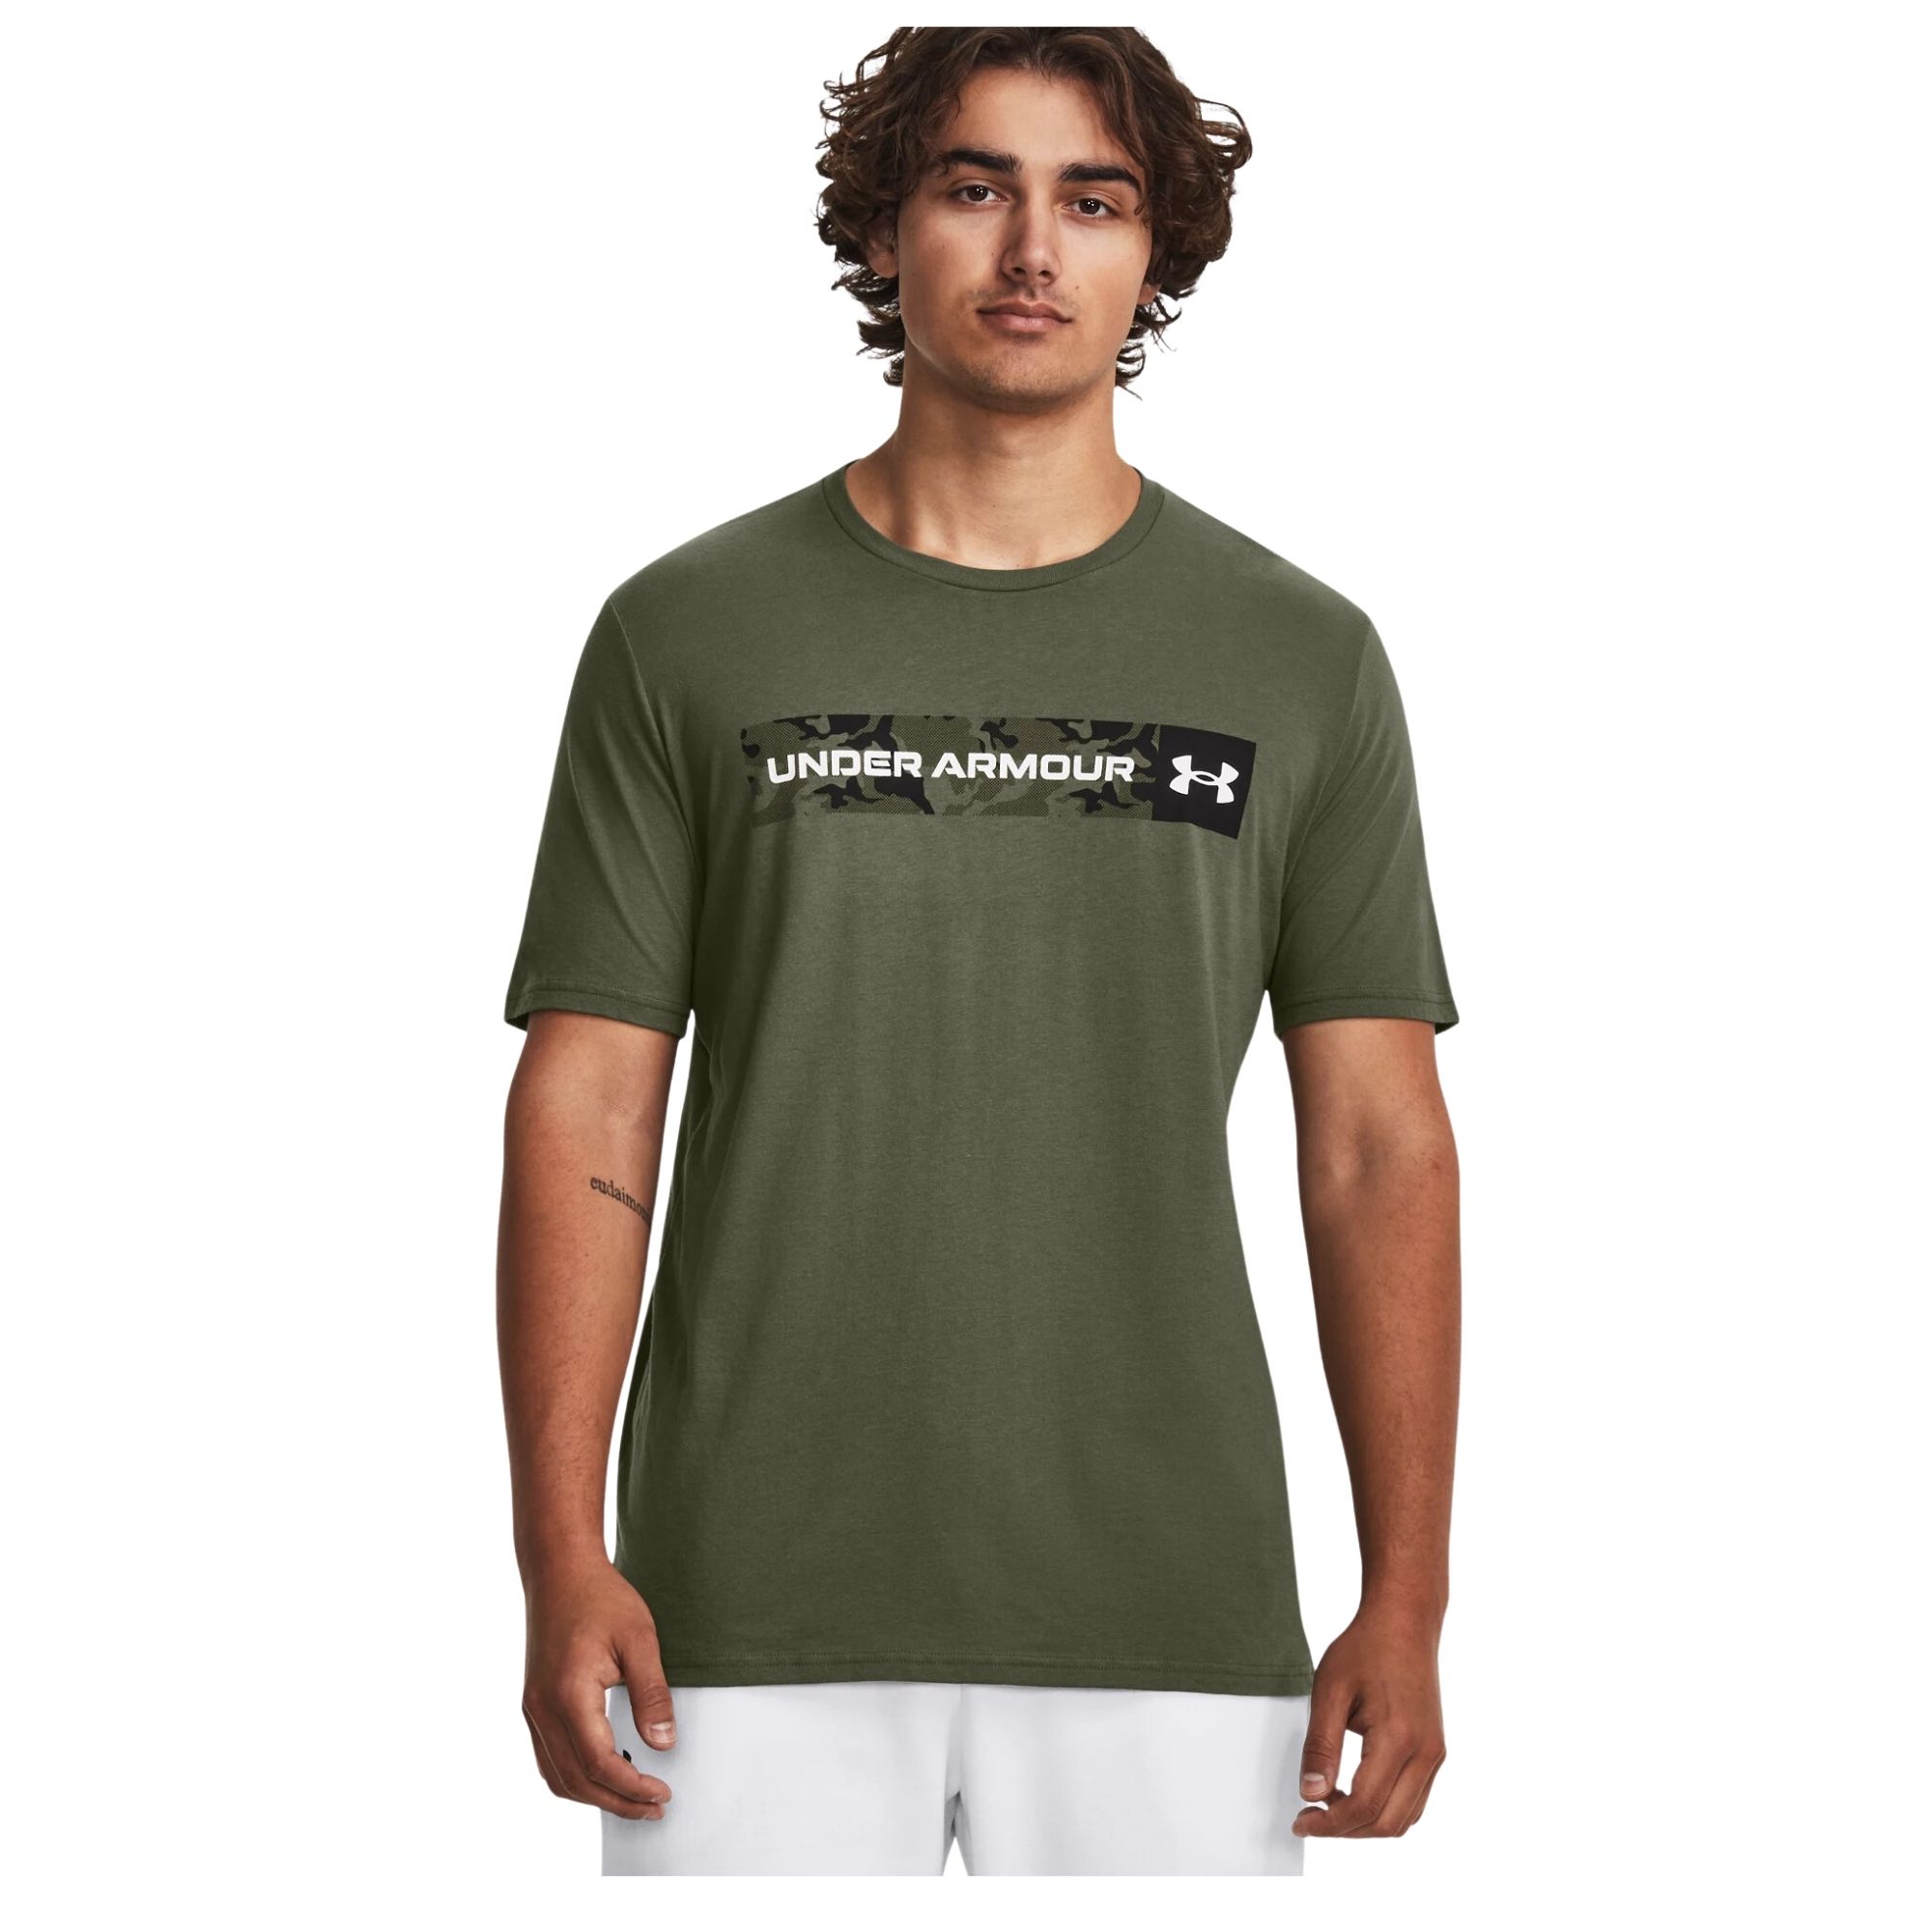 Camiseta Under Armour Tech Ssv Twist Feminina - Bordô - Bayard